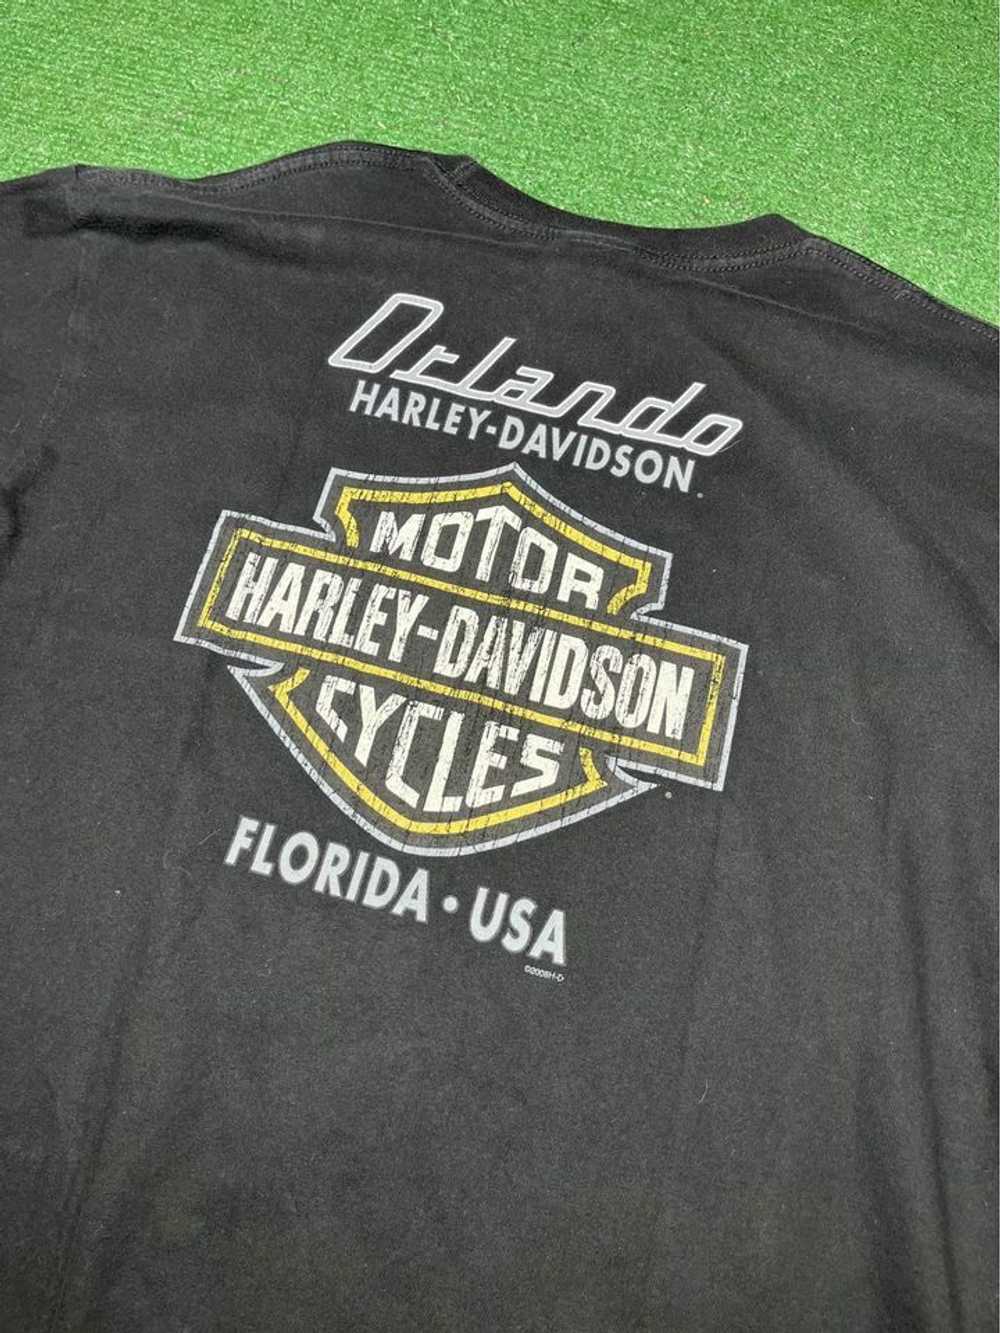 Harley Davidson Harley Davidson T-shirt Size XL - image 4